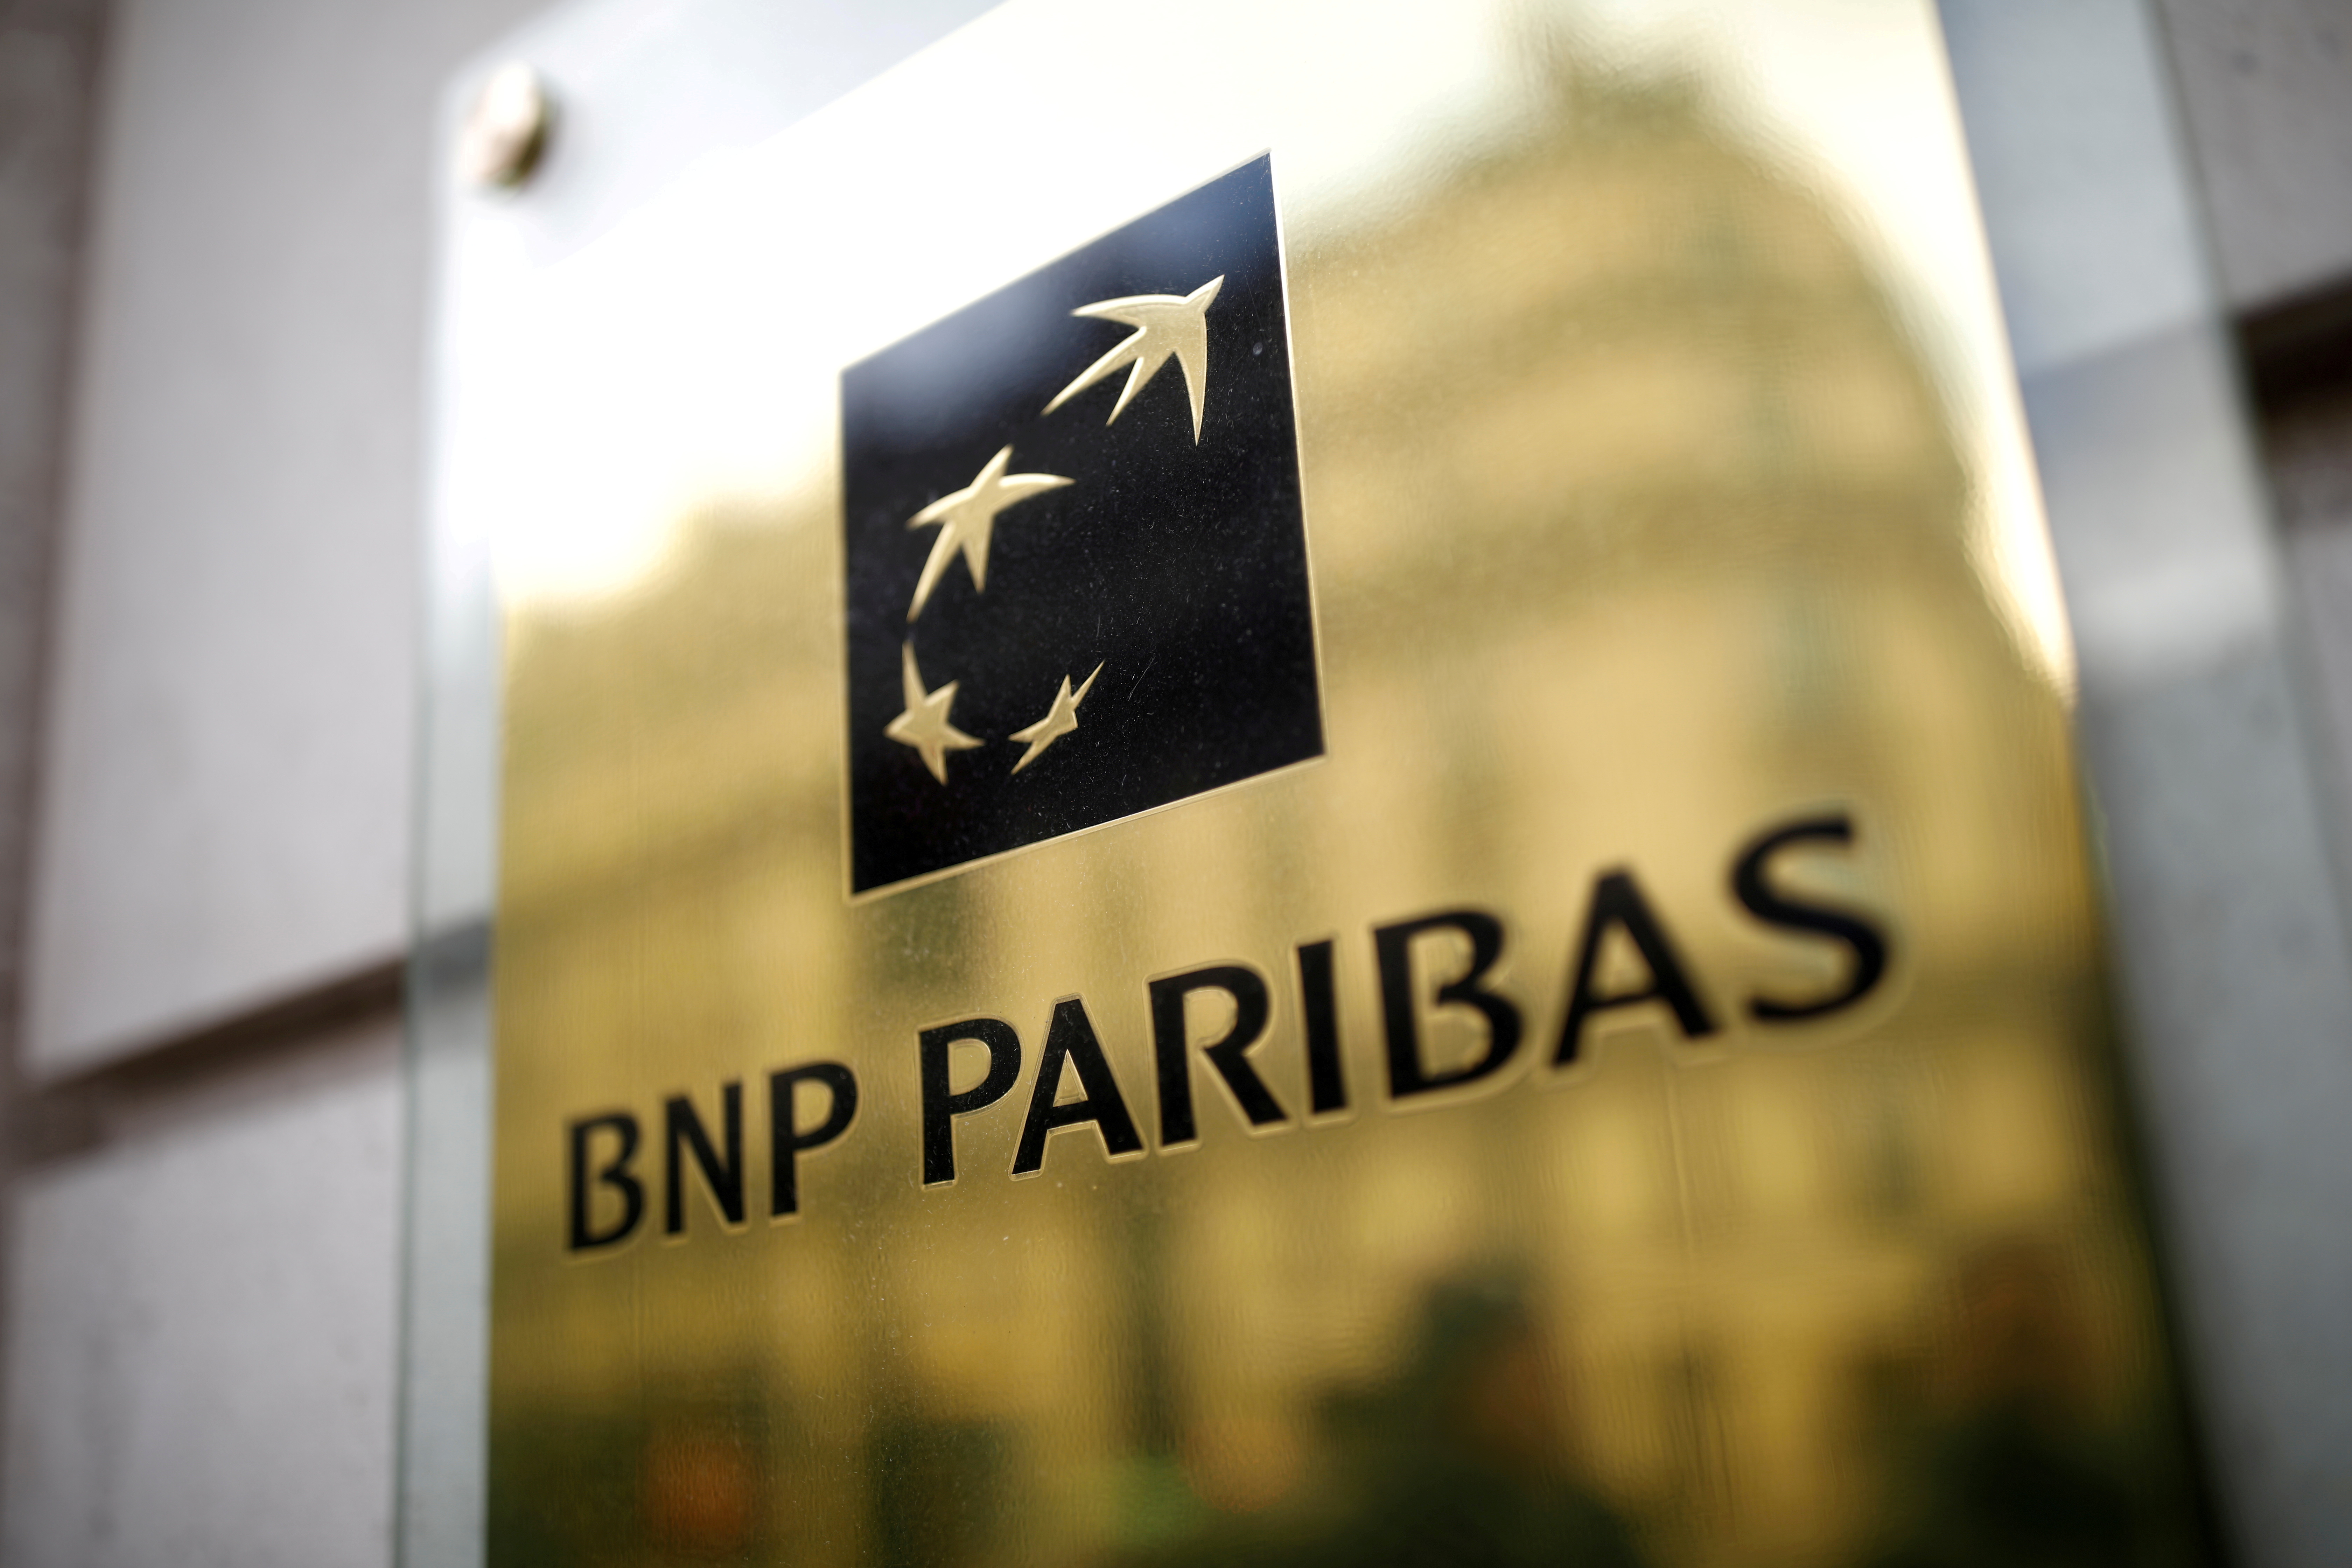 The BNP Paribas logo is seen at a branch in Paris, France, February 4, 2020. REUTERS/Benoit Tessier